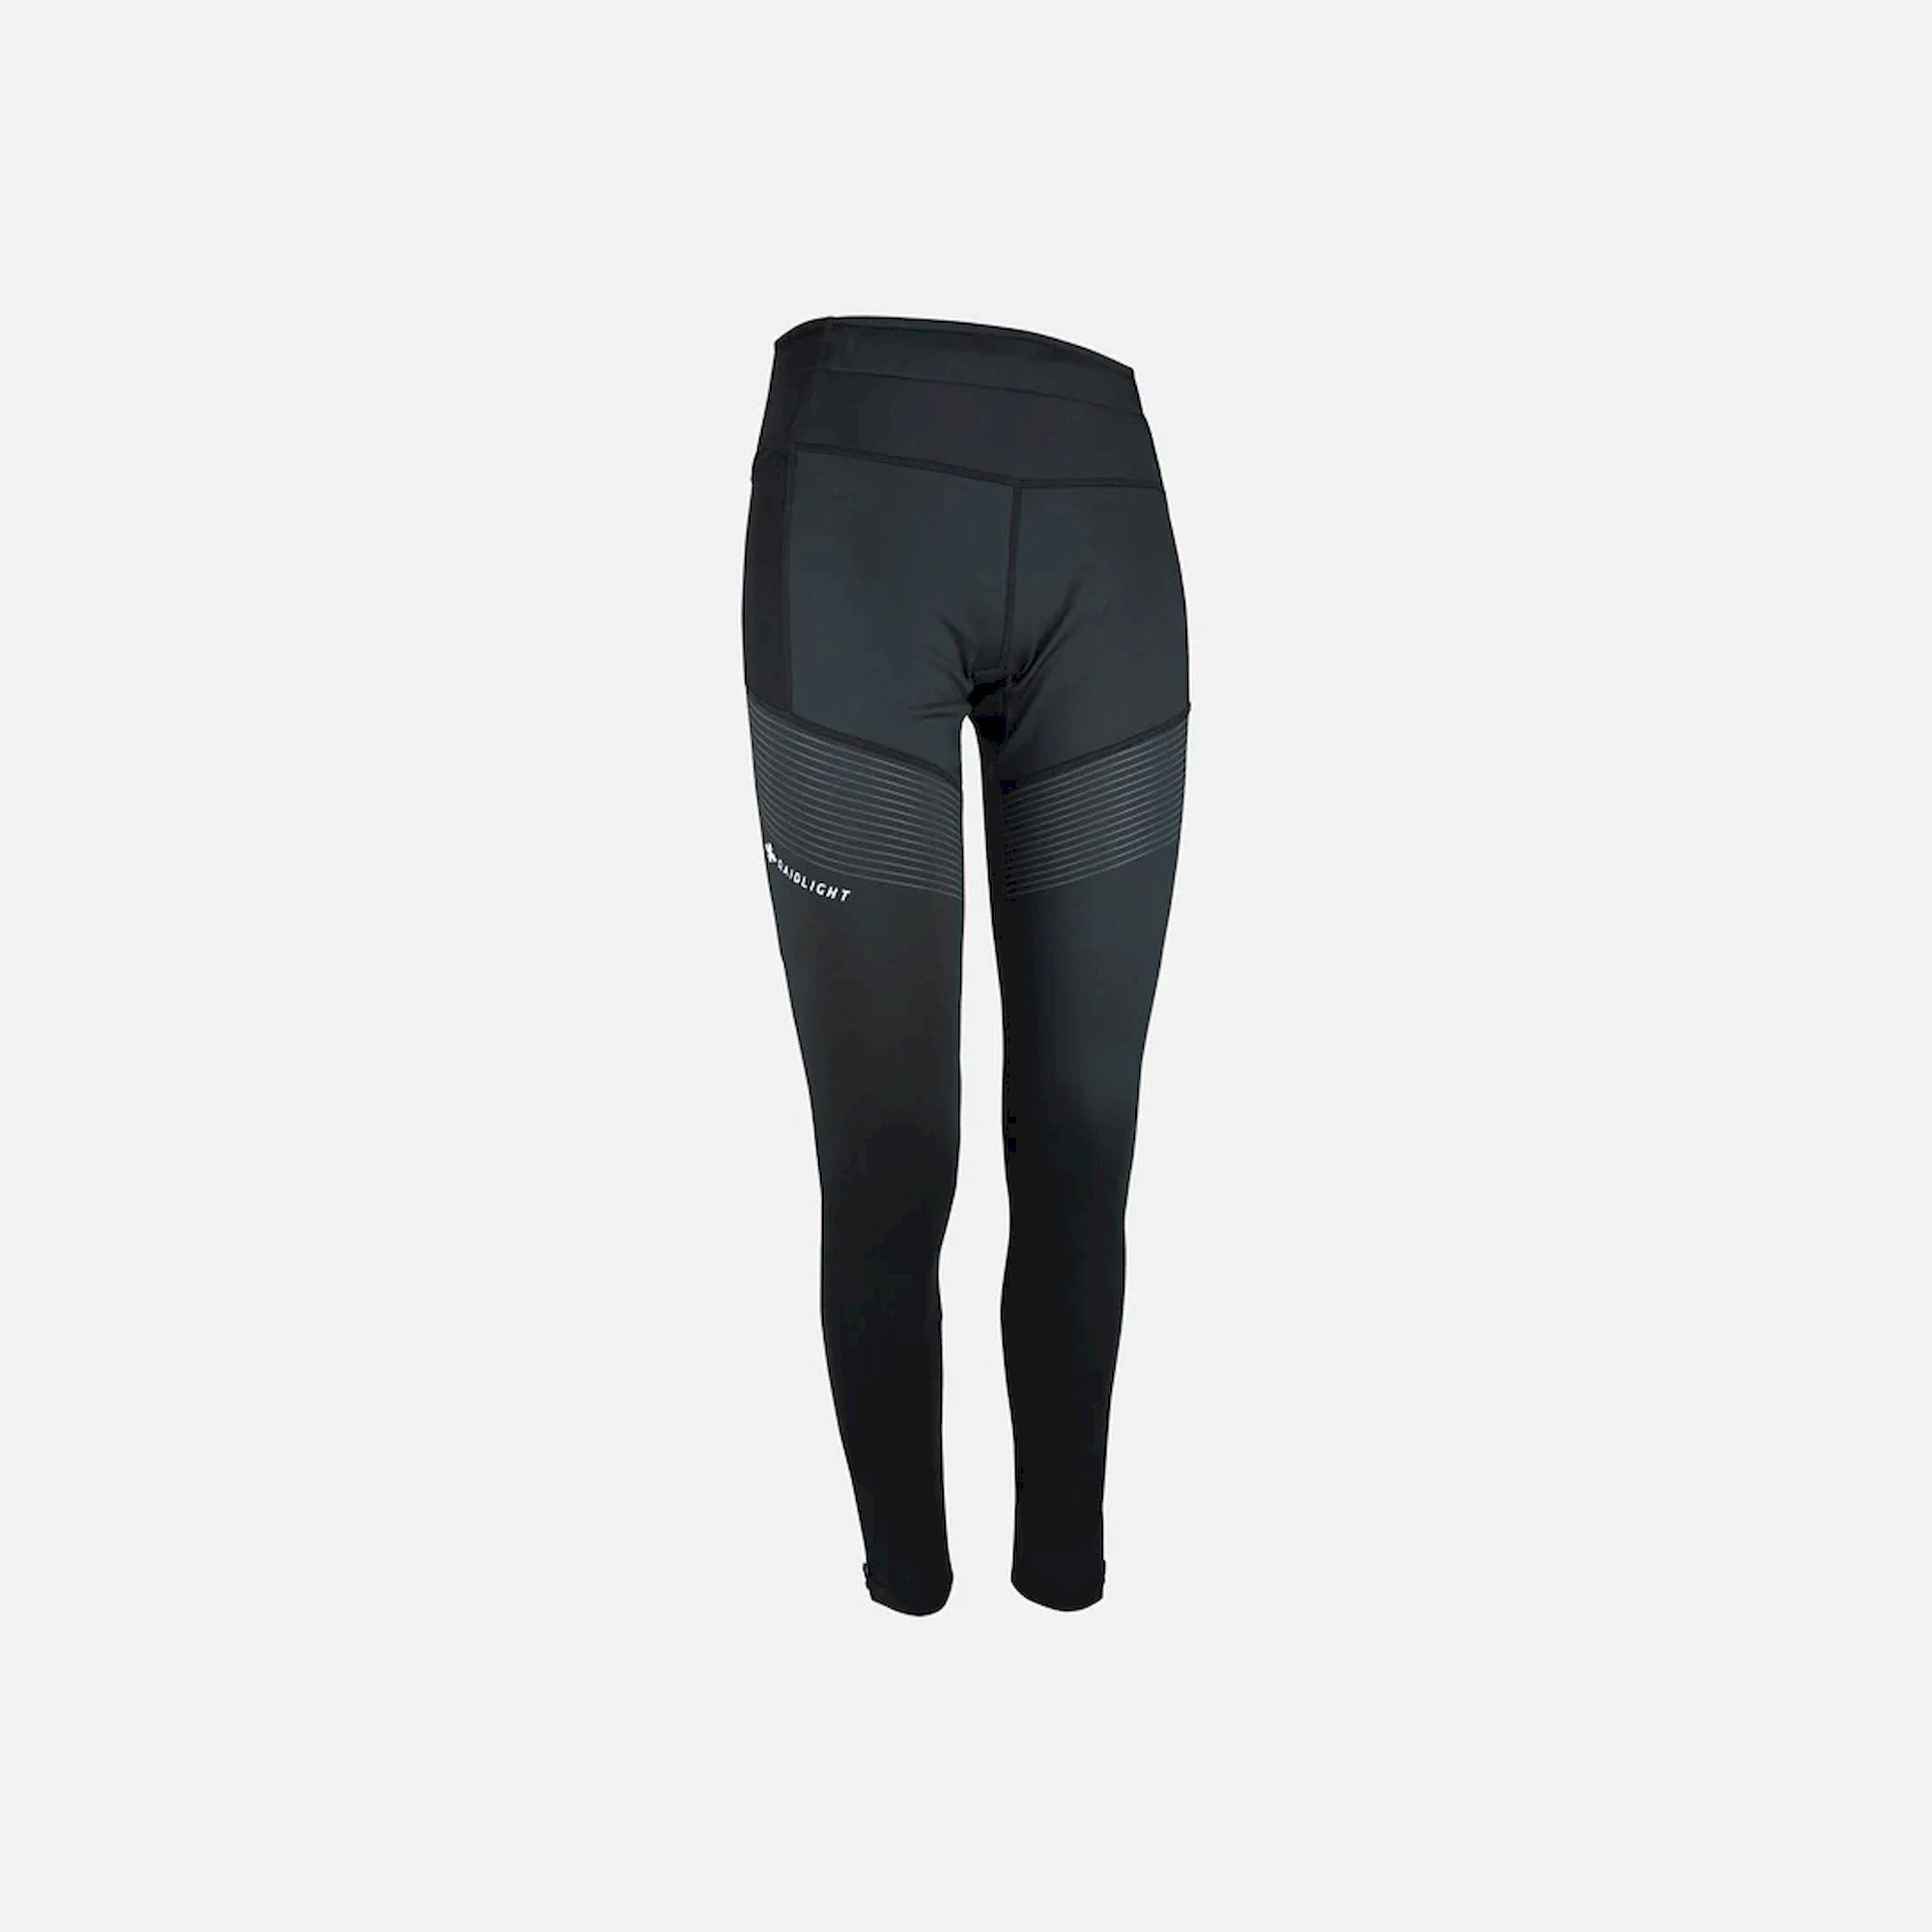 Raidlight Wintertrail Tight - Running leggings - WoMen's